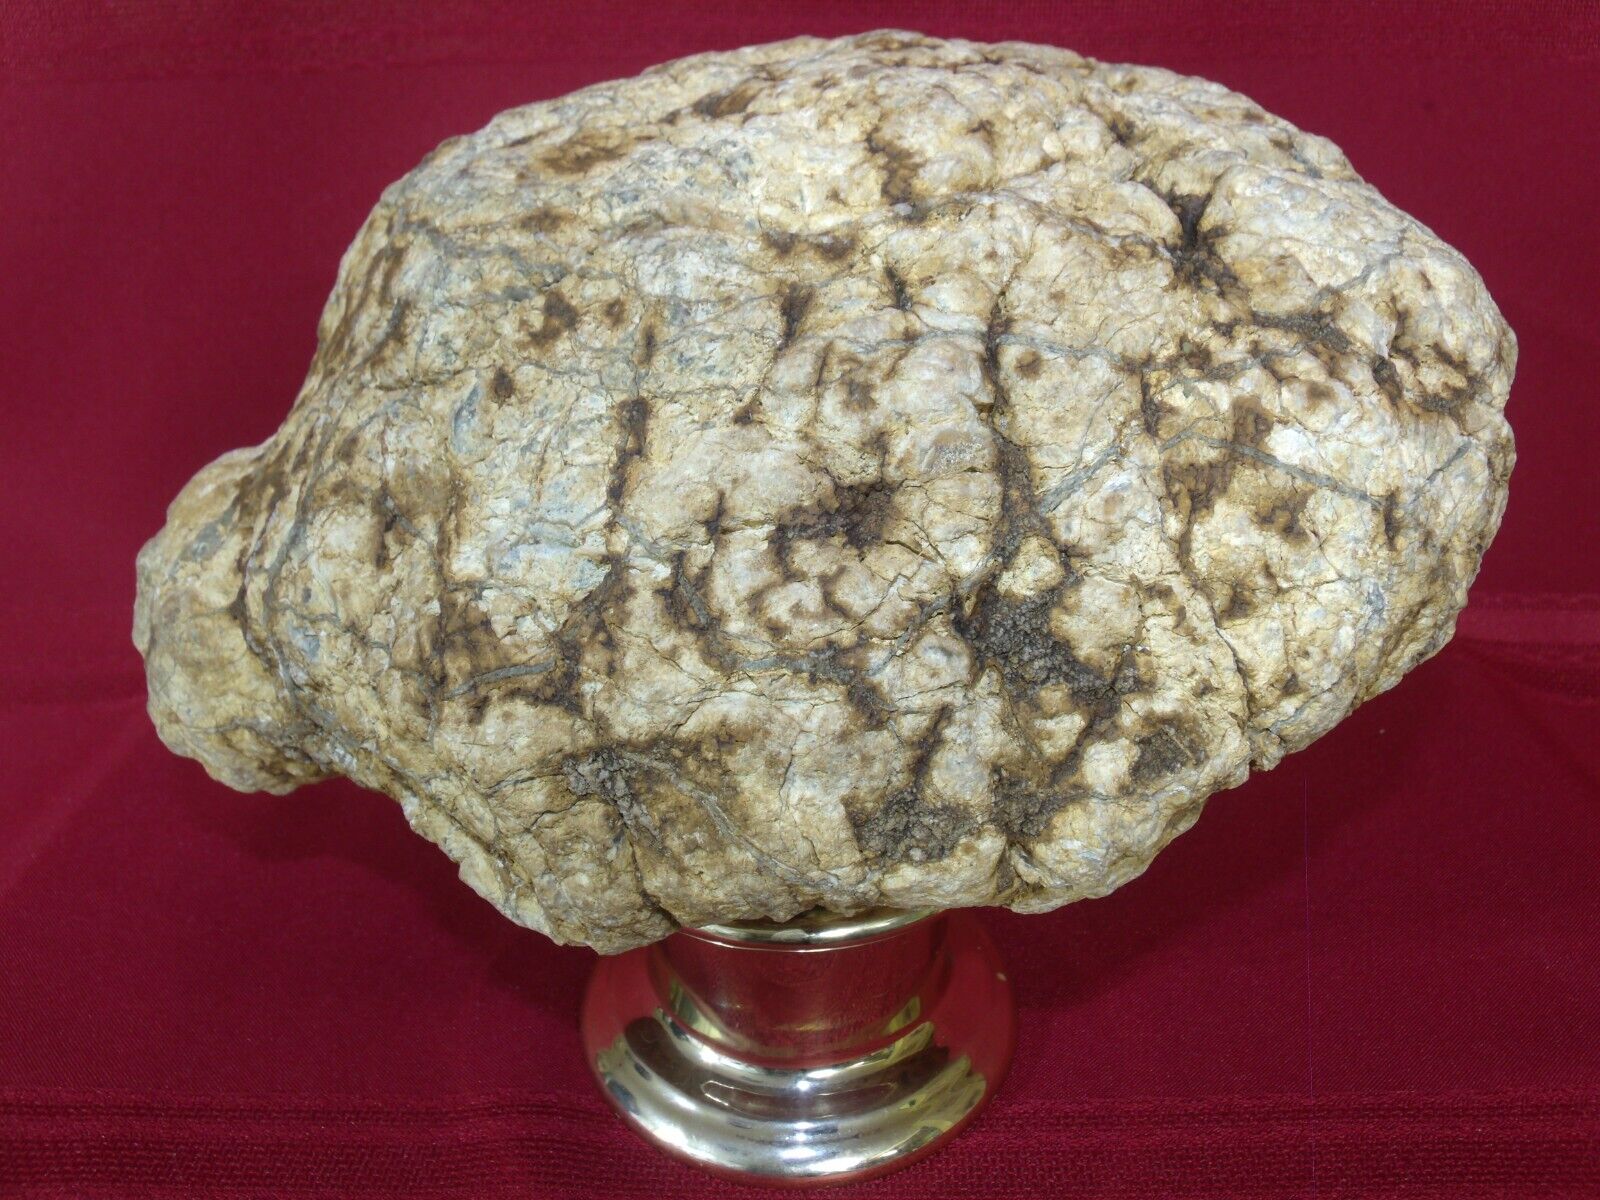 Huge Unopened KY Turtle Shaped Geode Large 14.7 lbs Crystal Quartz Natural Gift